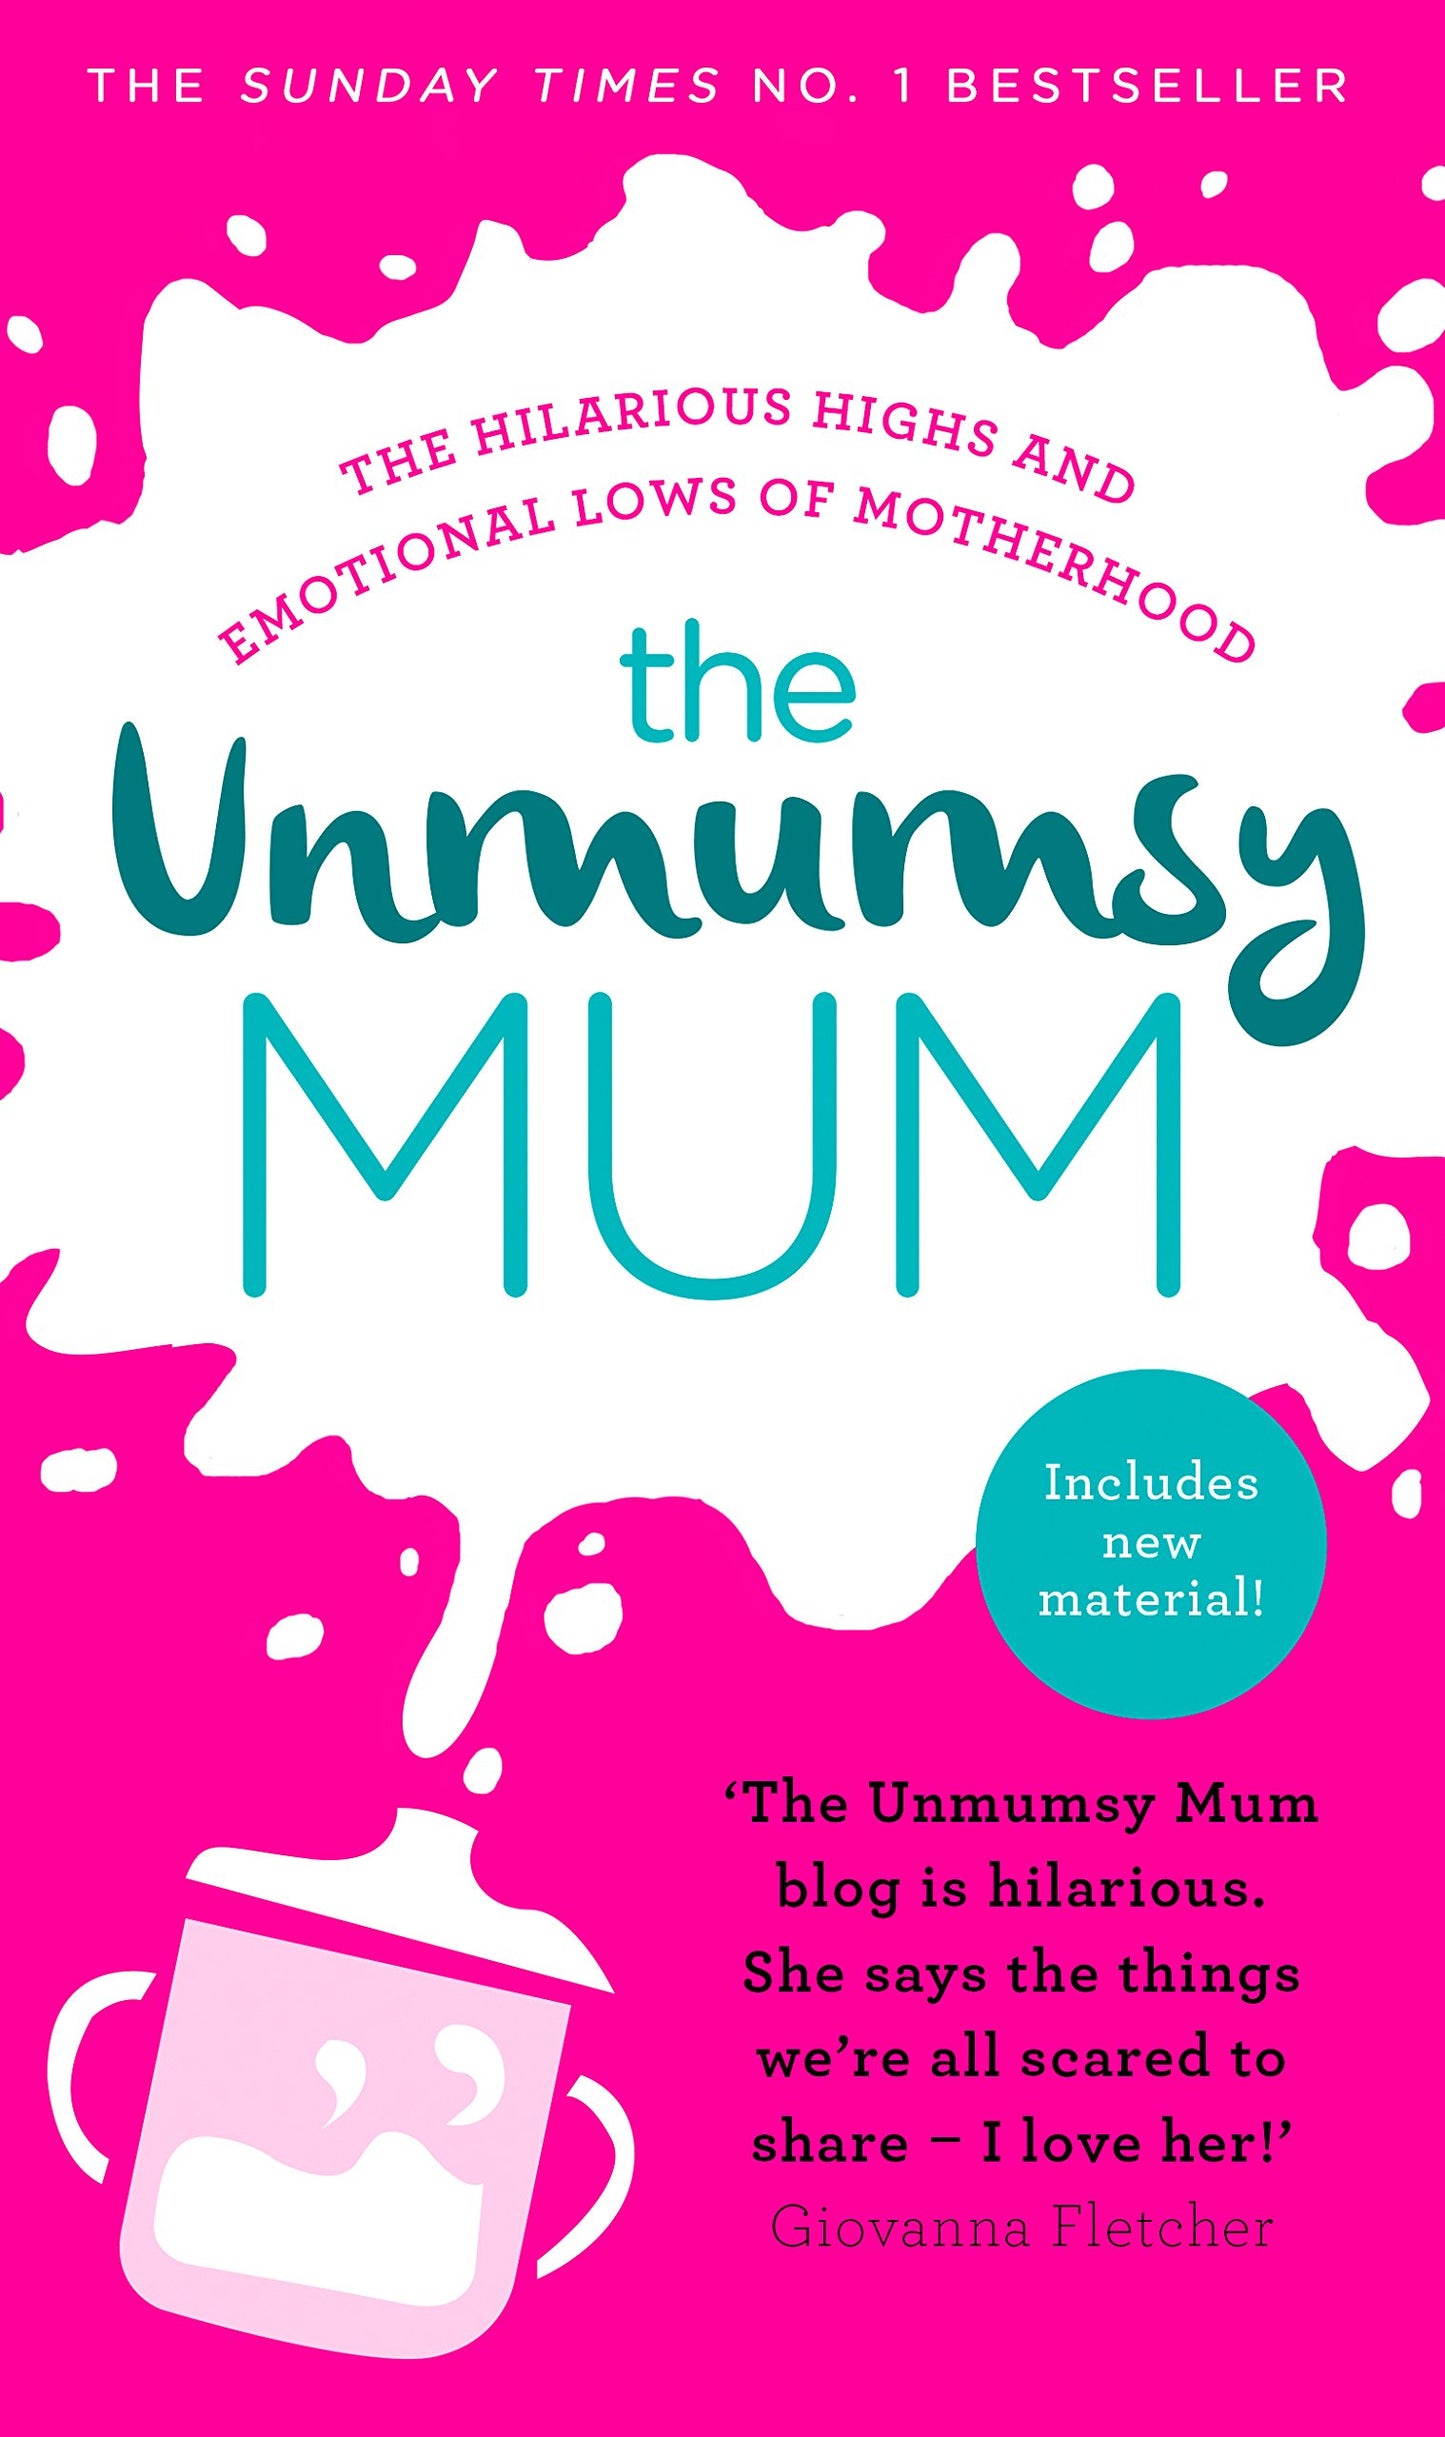 The Unmumsy Mum by Giovanna Fletcher